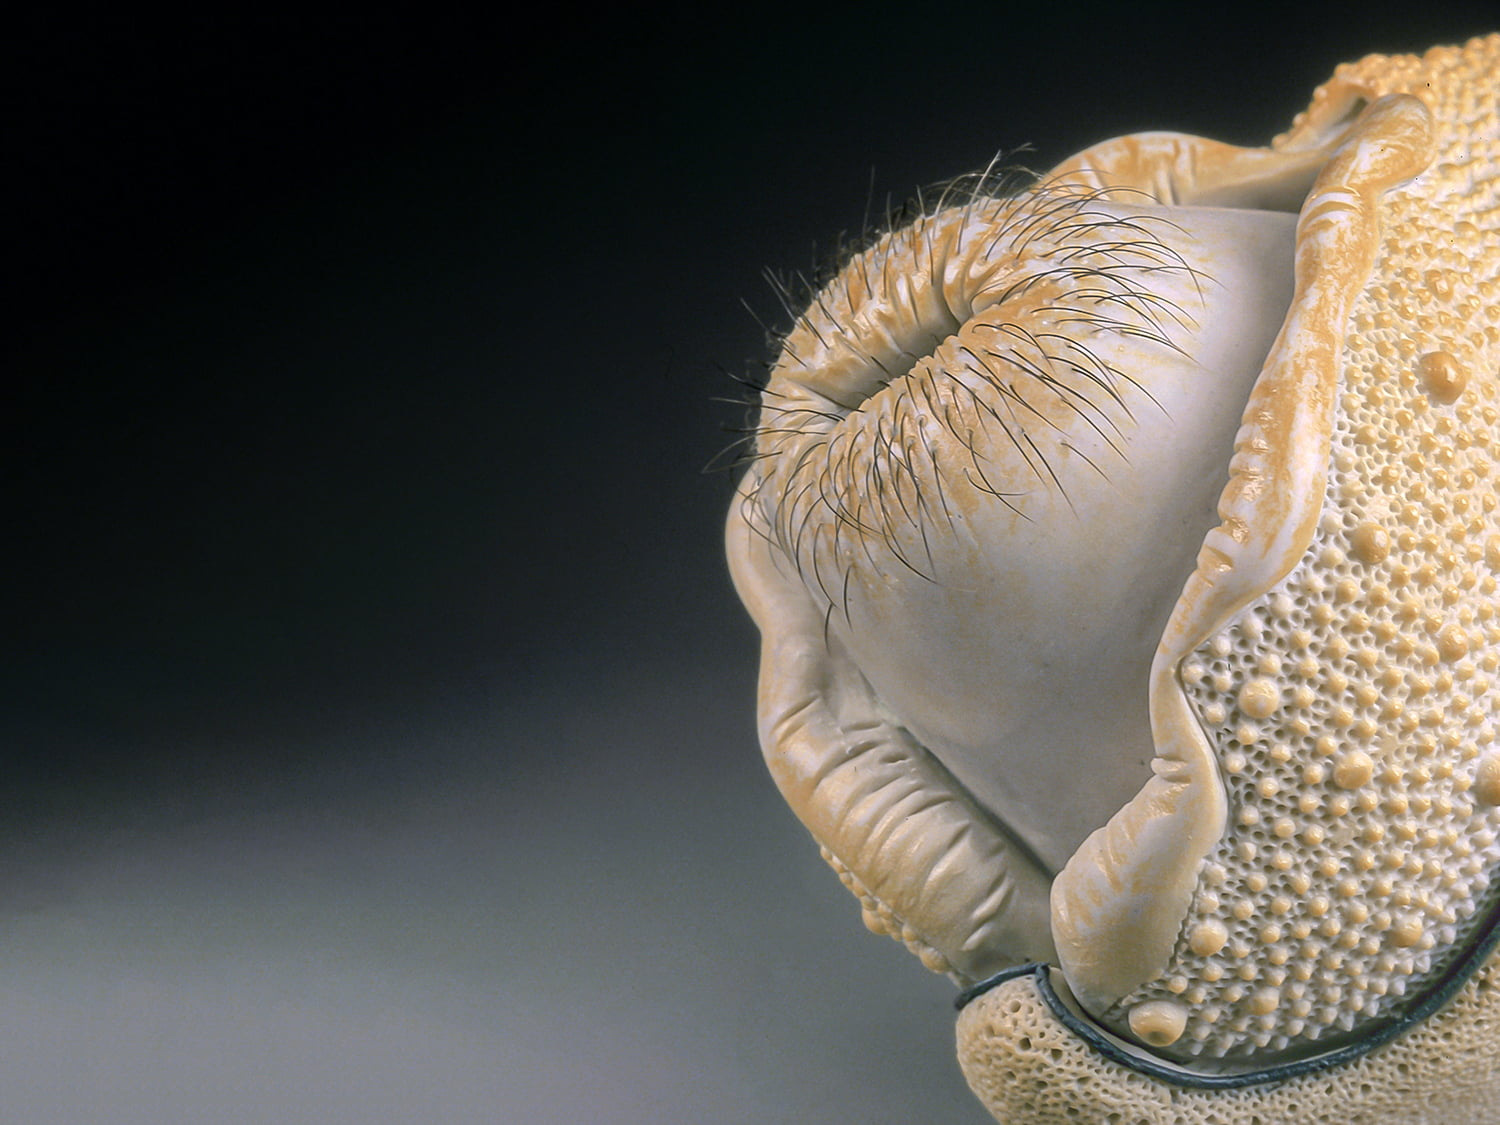 Jason Briggs "Tootsie". Porcelain, hair, and mixed media. Sculptural ceramic art object.